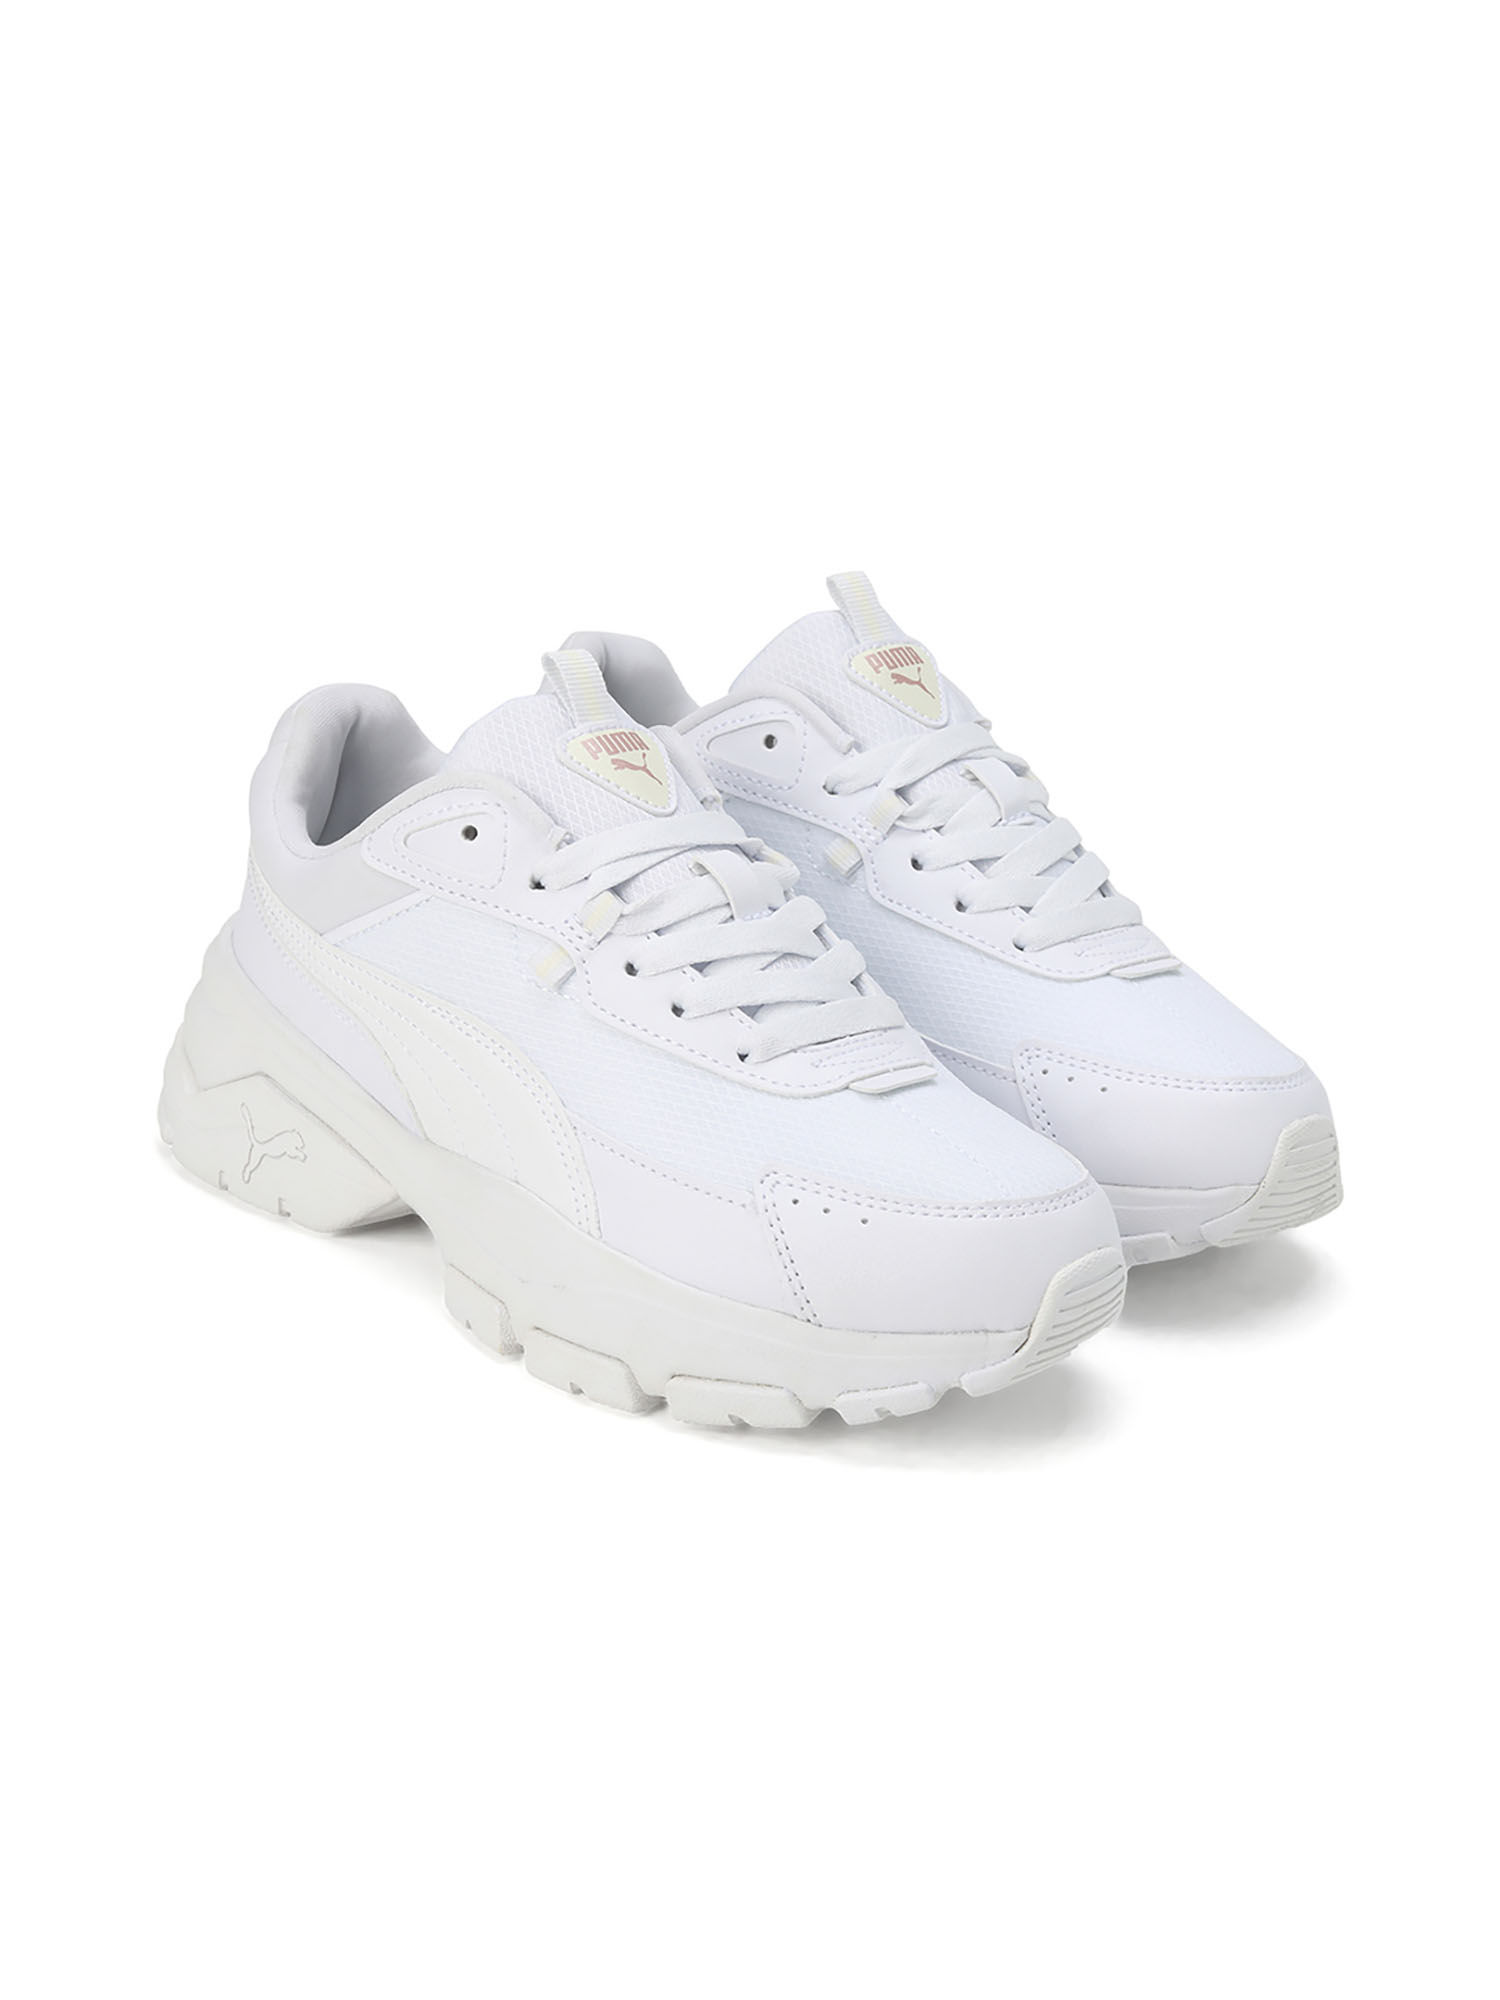 Fila Disruptor 2 Premium Shoes Women's Size 7 White Chunky Sneaker | eBay